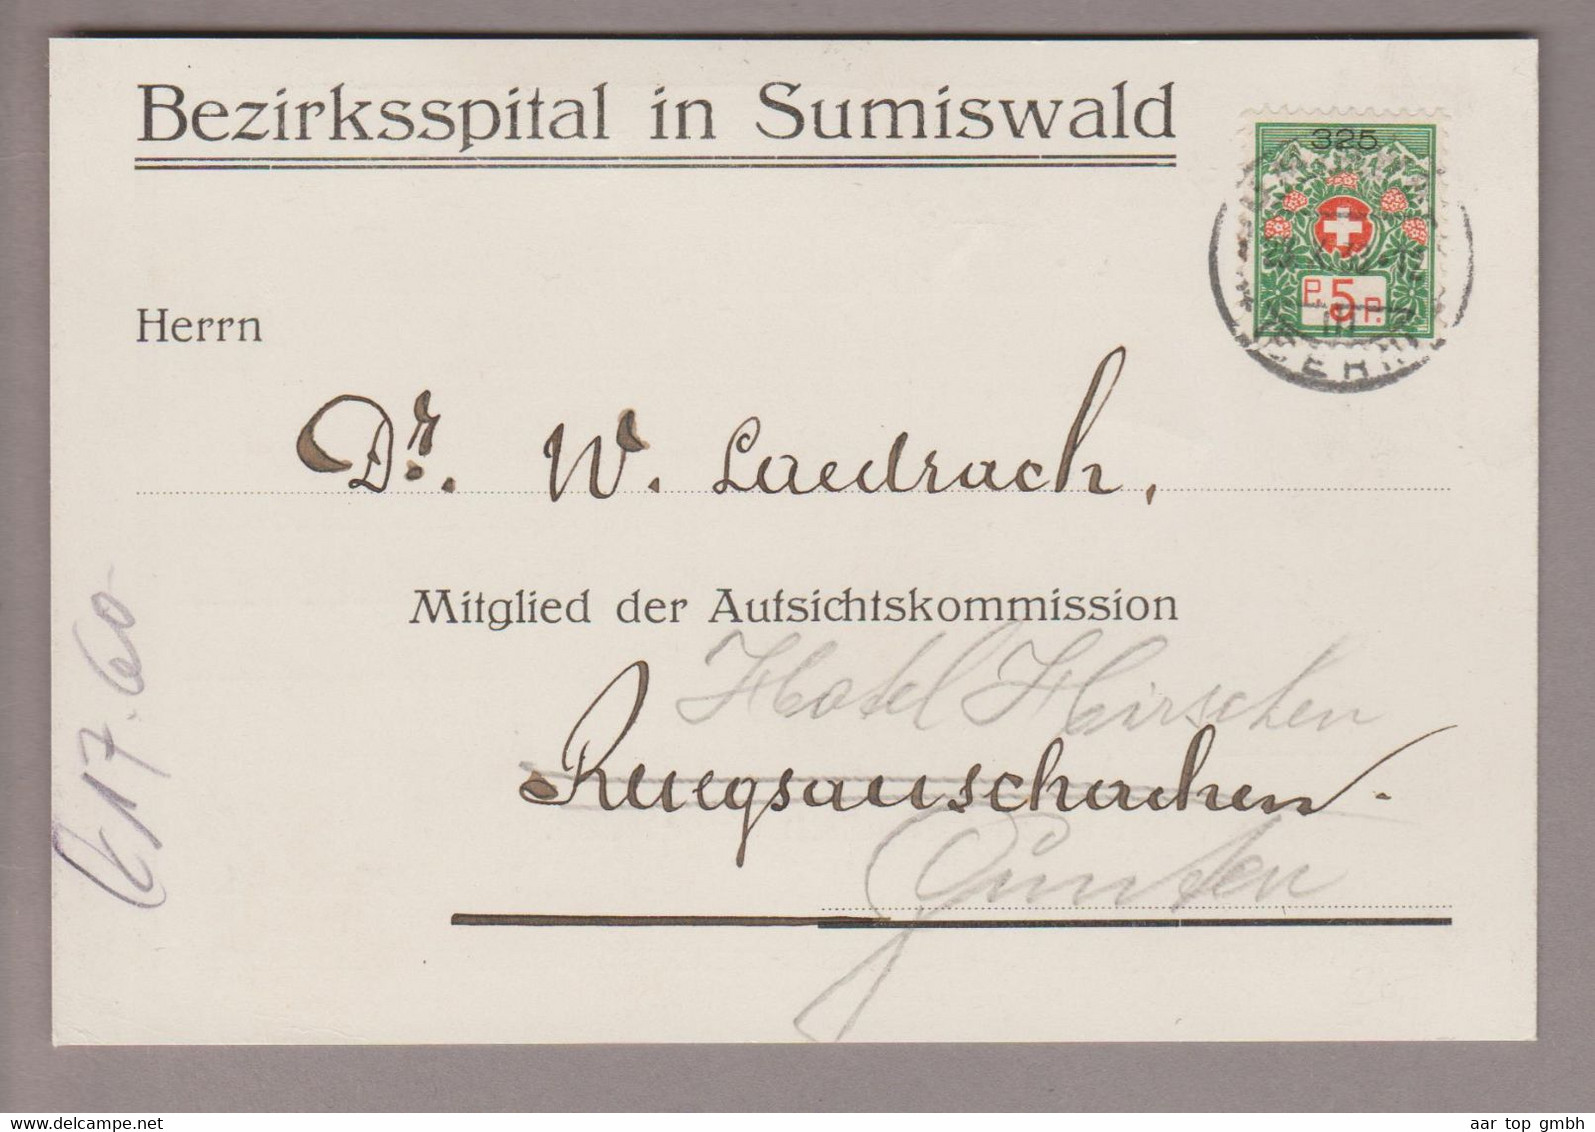 CH Portofreiheit Zu#8 5Rp. GR#325 Postkarte 1933-10-27 Sumiswald Bezirksspital - Portofreiheit